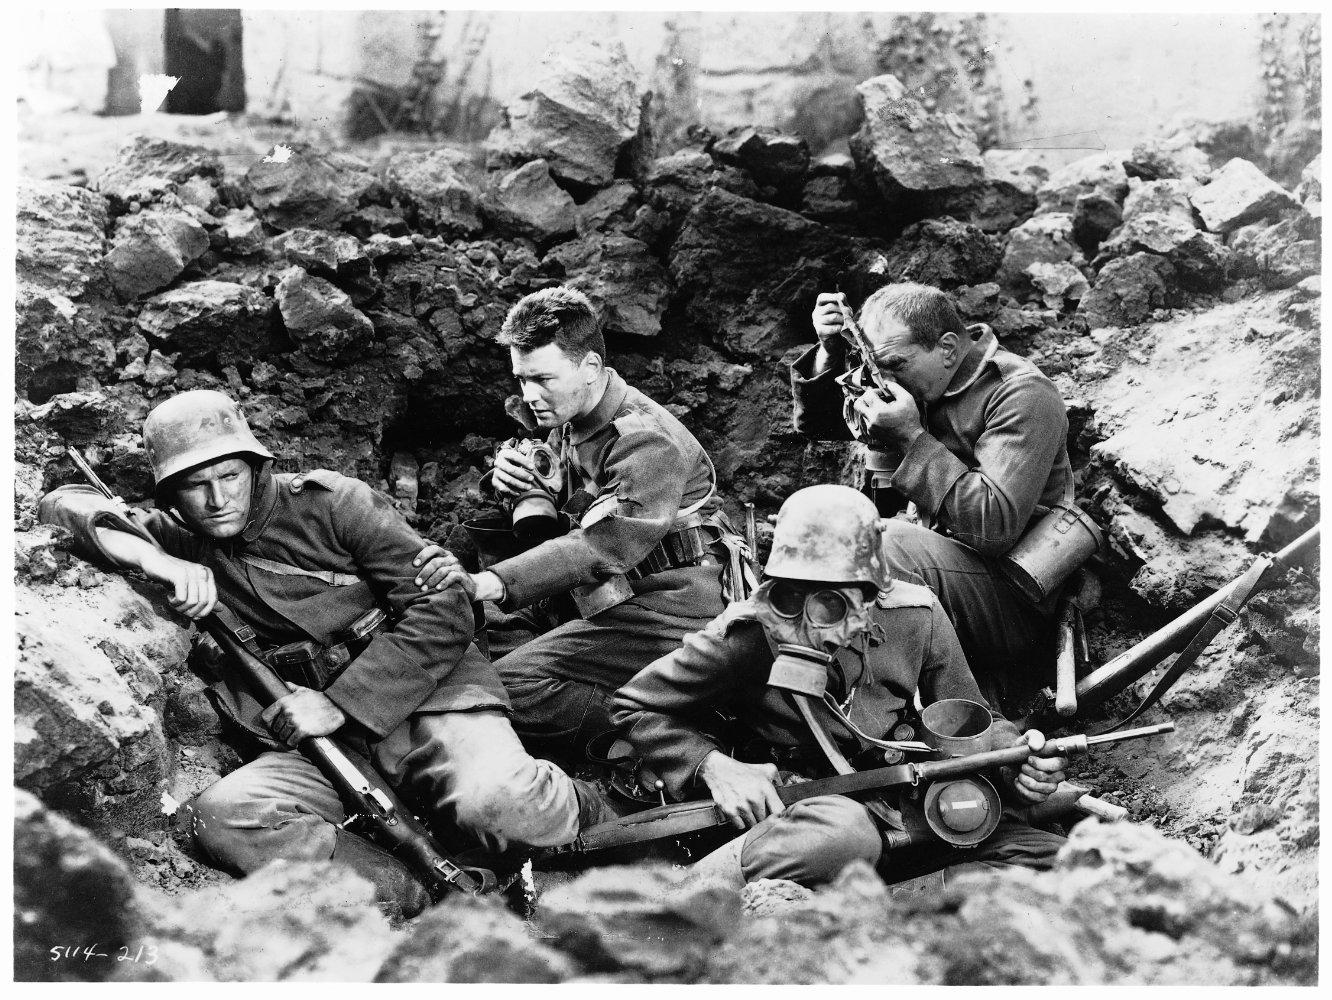 1931 - All Quiet on the Western Front كل شيء هادئ على الجبهة الغربية